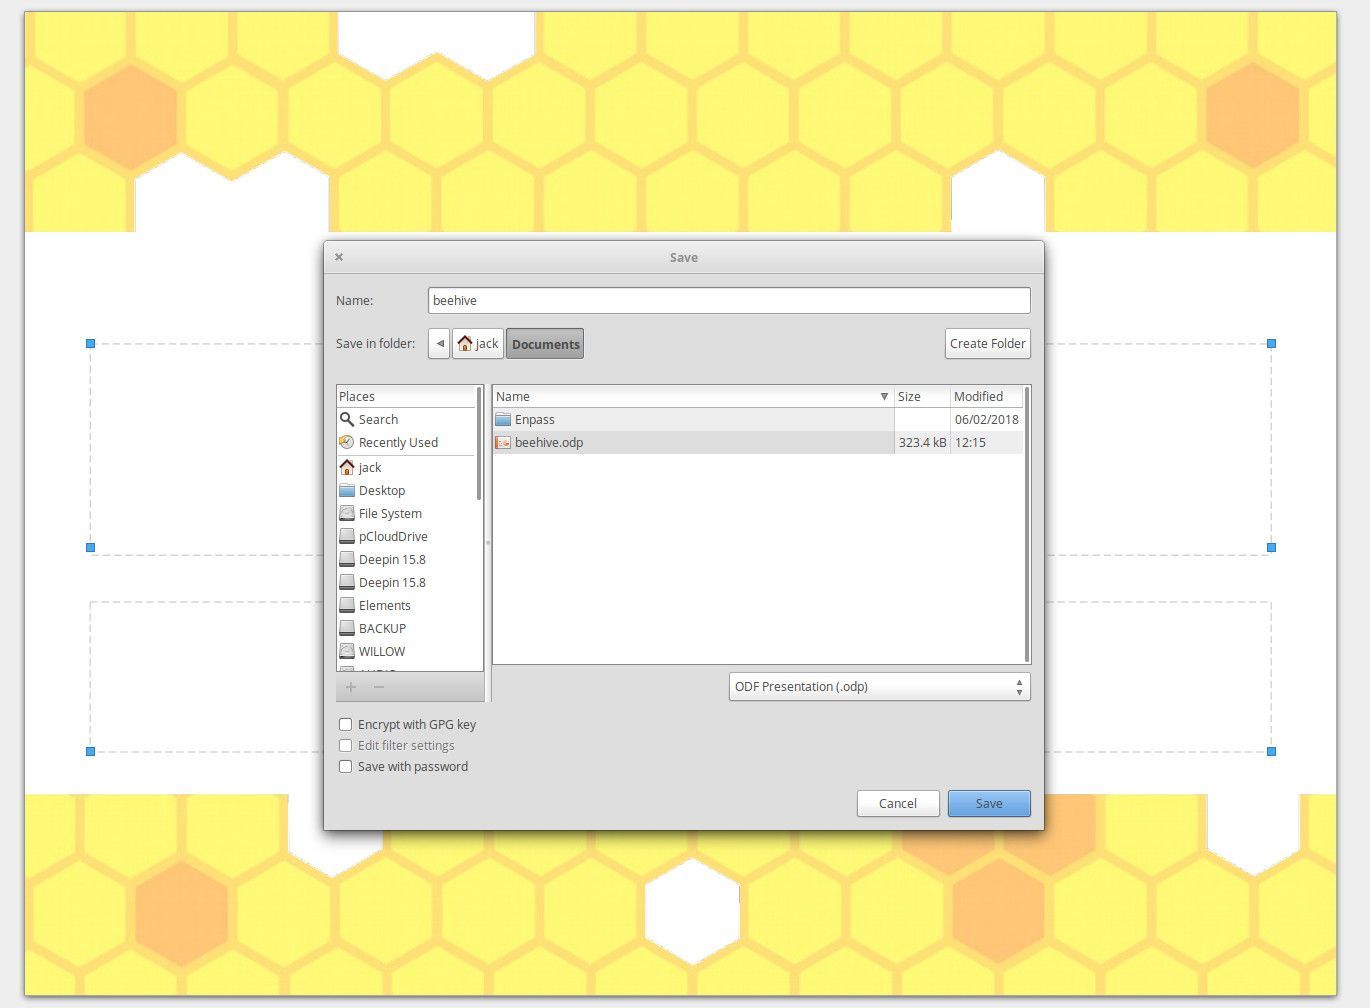 Снимок экрана сохранения презентации LibreOffice в формате .odp.